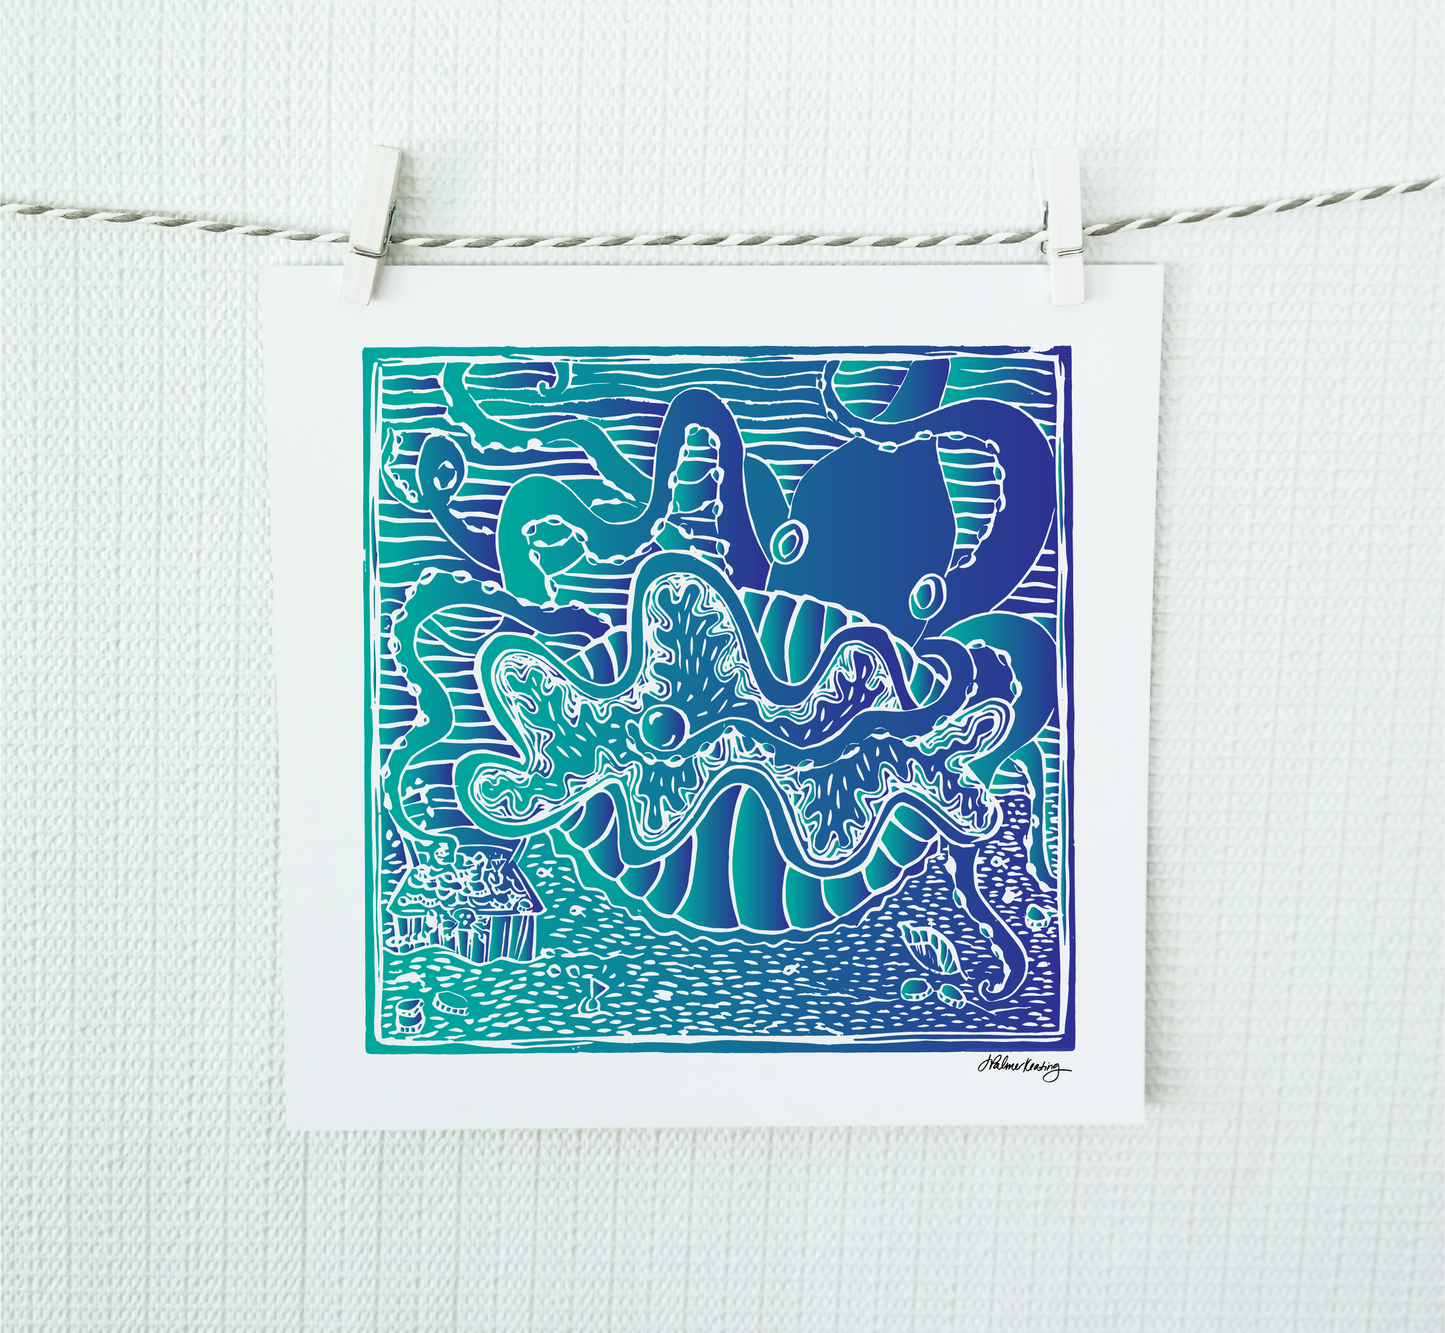 Octopuses Garden (Digital print of original lino block print)